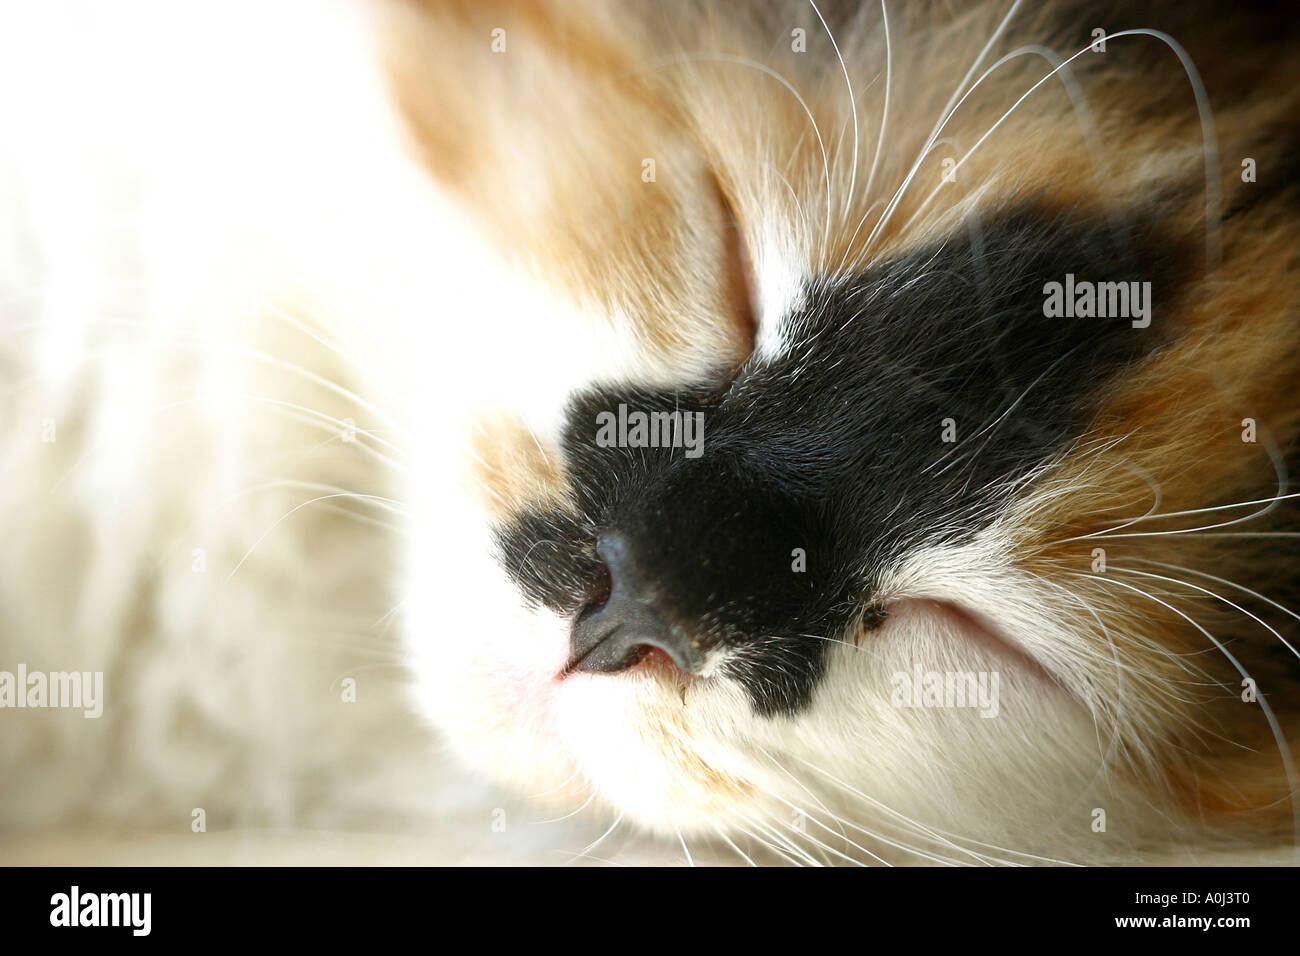 Close-up of a cat sleeping Stock Photo